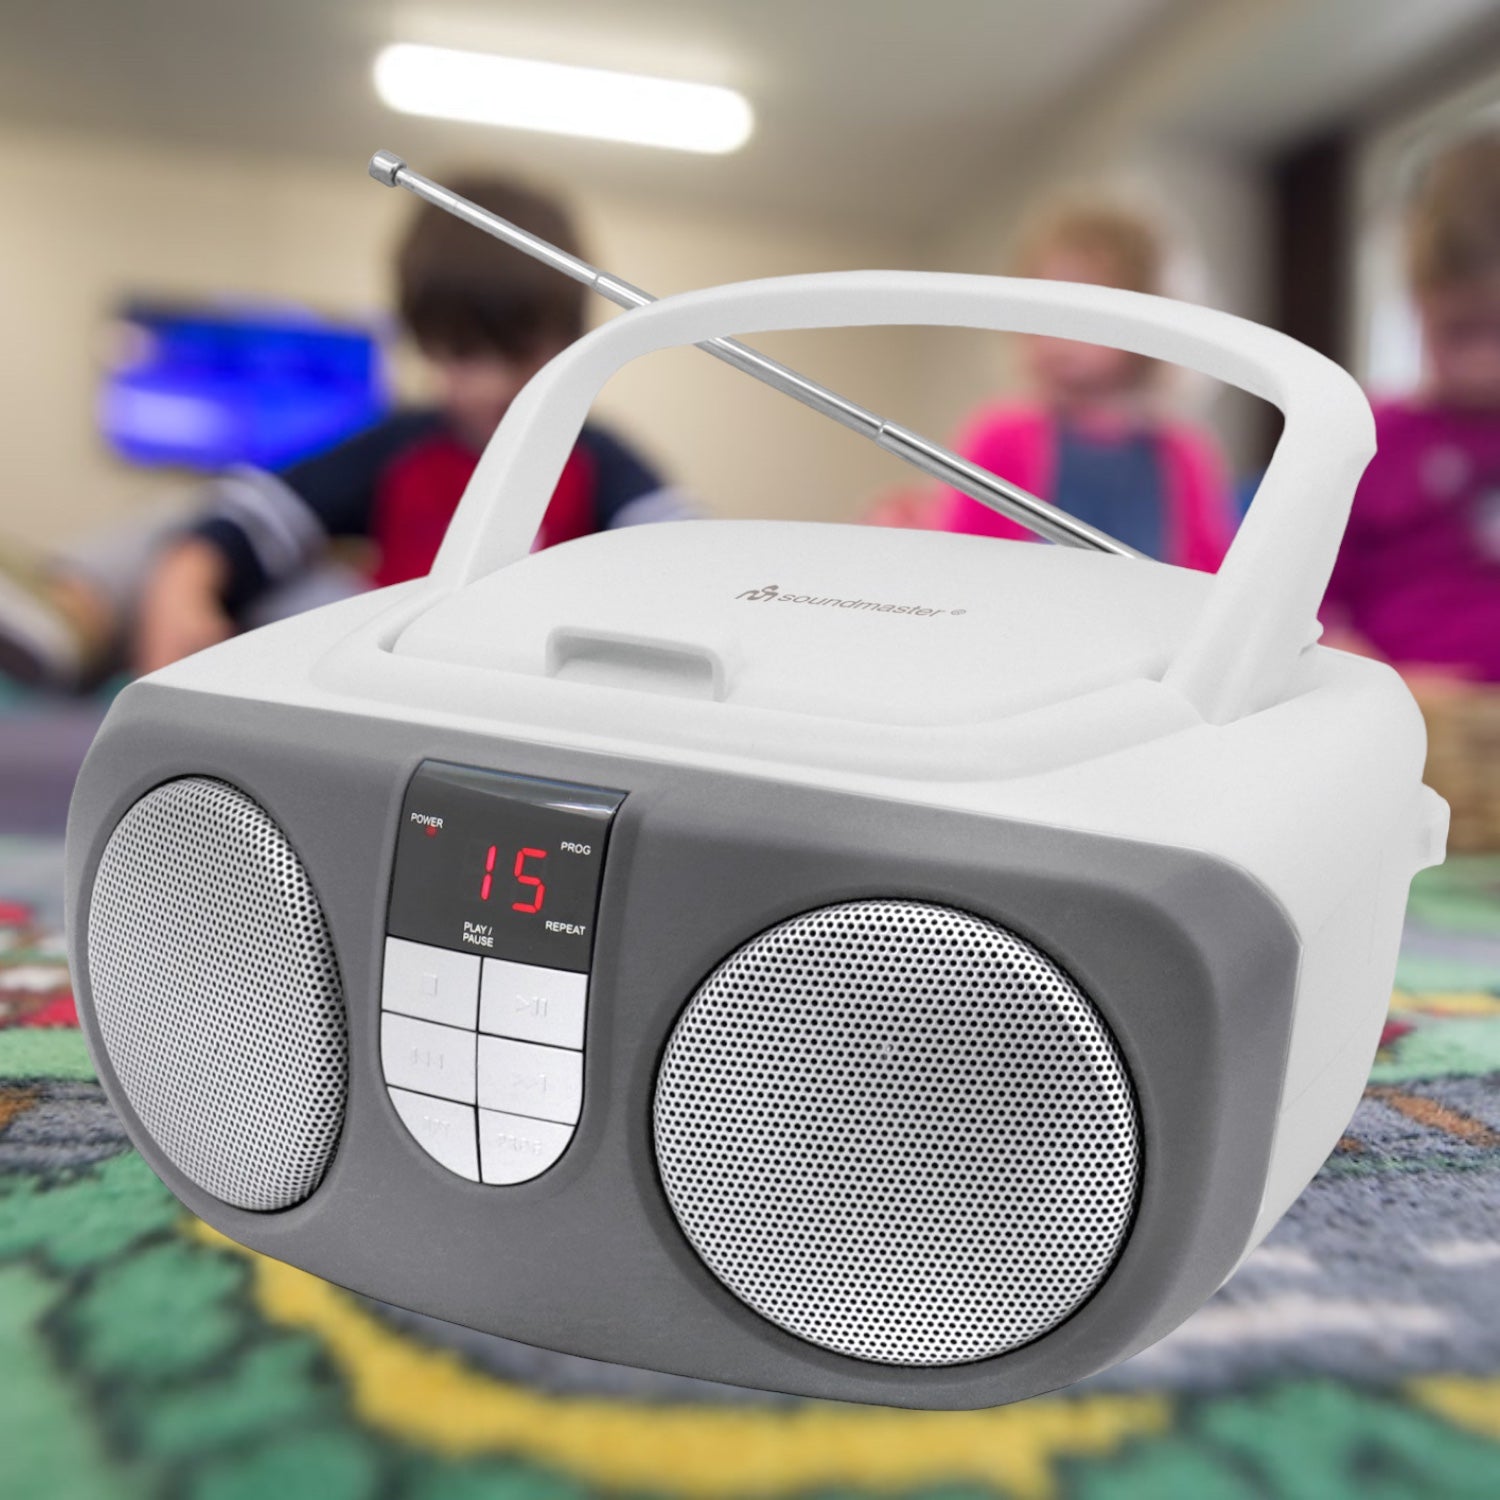 Soundmaster SCD1400 radio portable CD player radio AUX-IN children's radio boombox